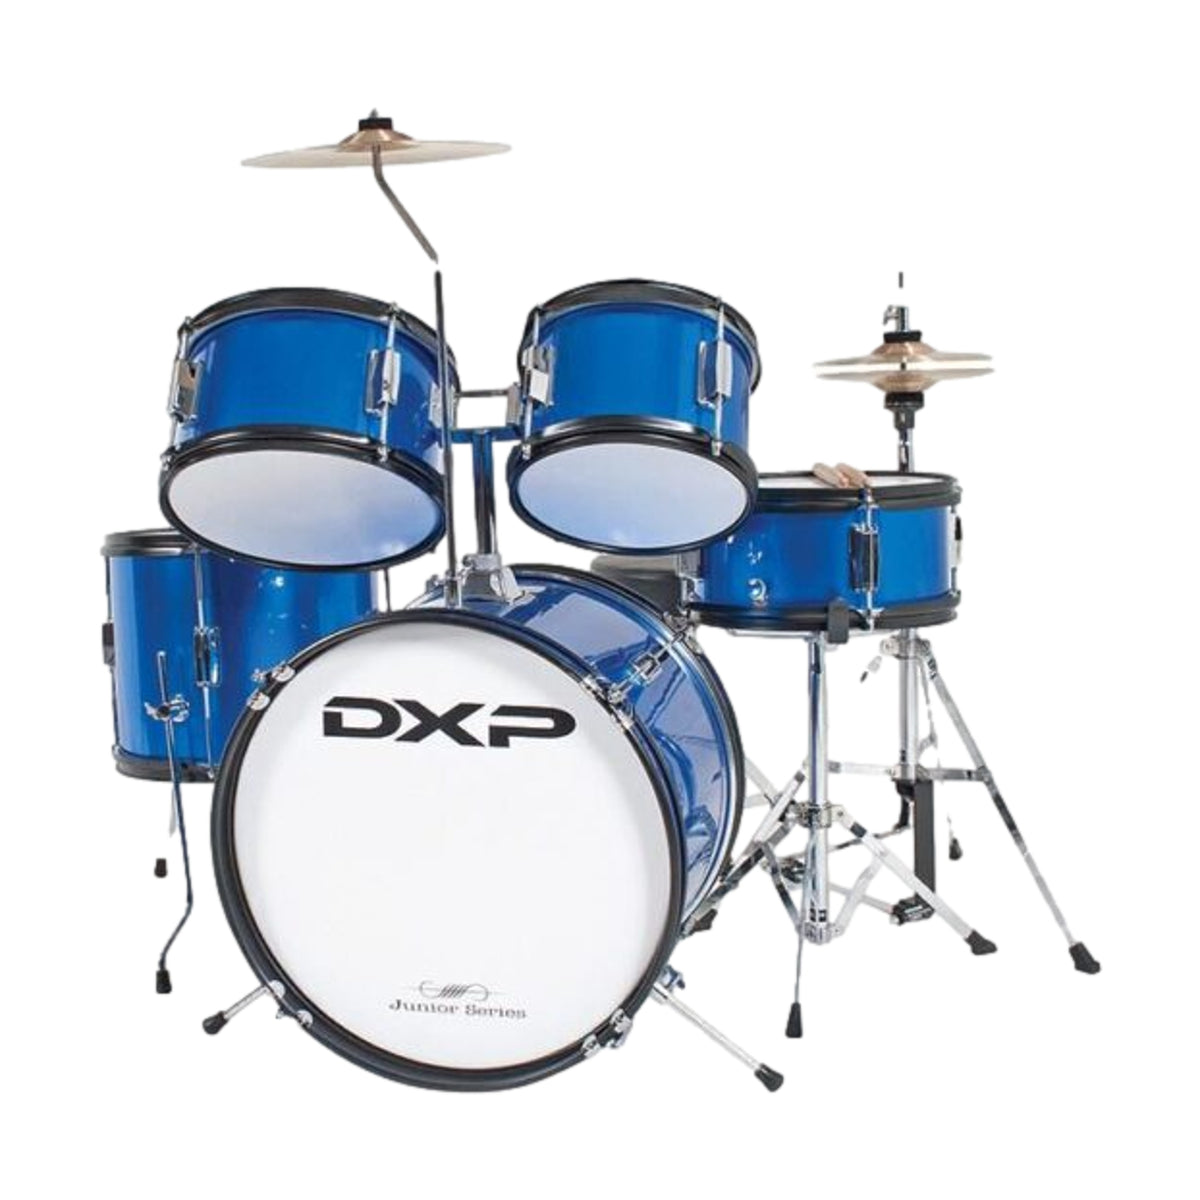 DXP Junior Series 5 Piece Drum Kit Metallic Blue